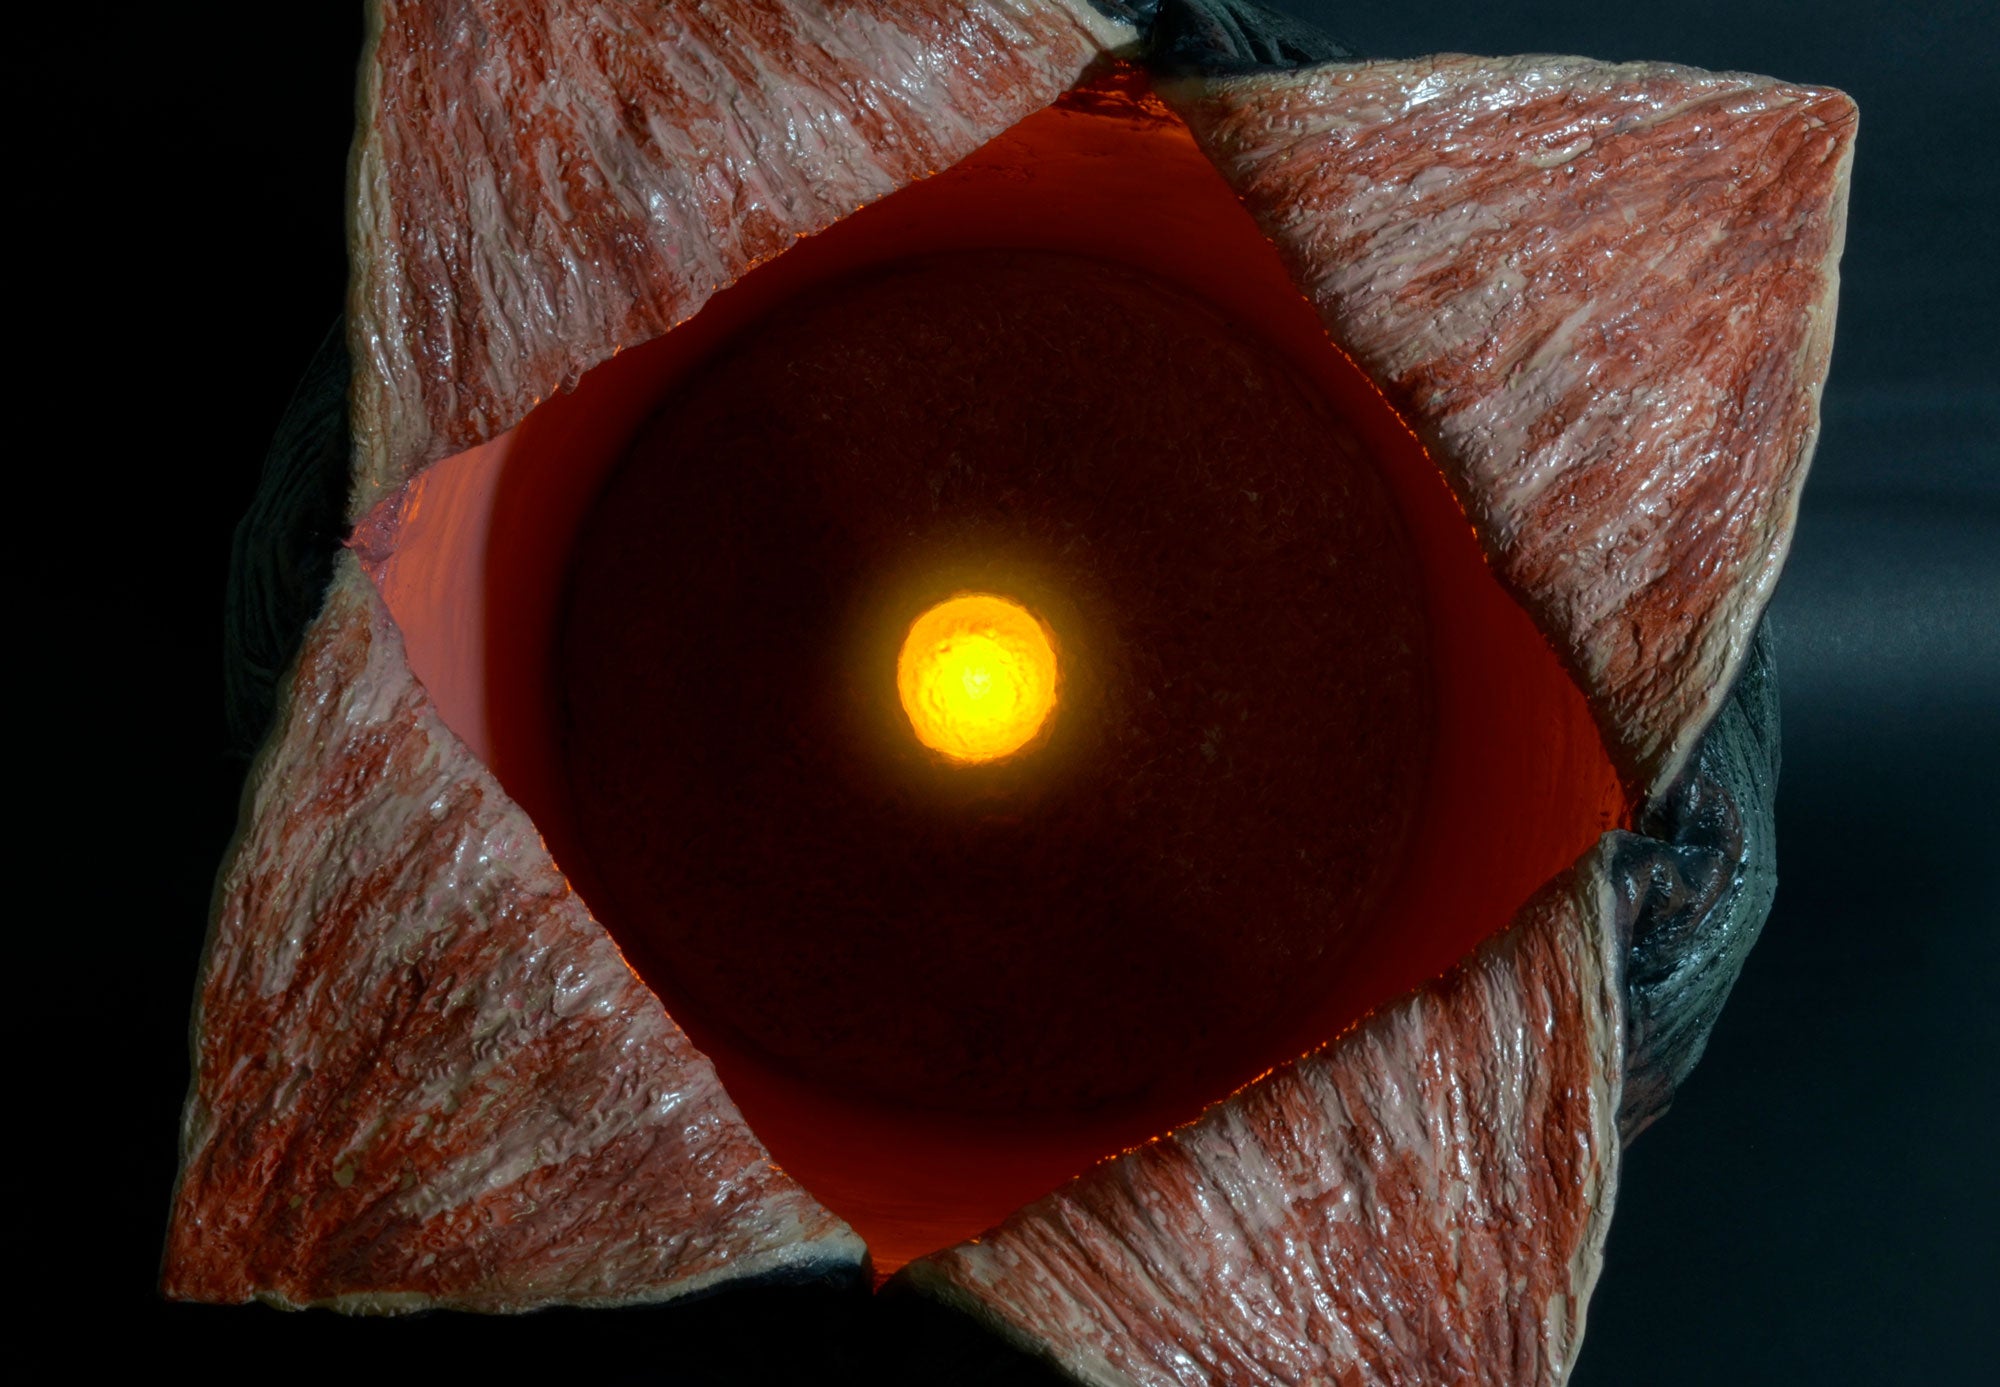 Aliens Xenomorph egg top-view showing light inside